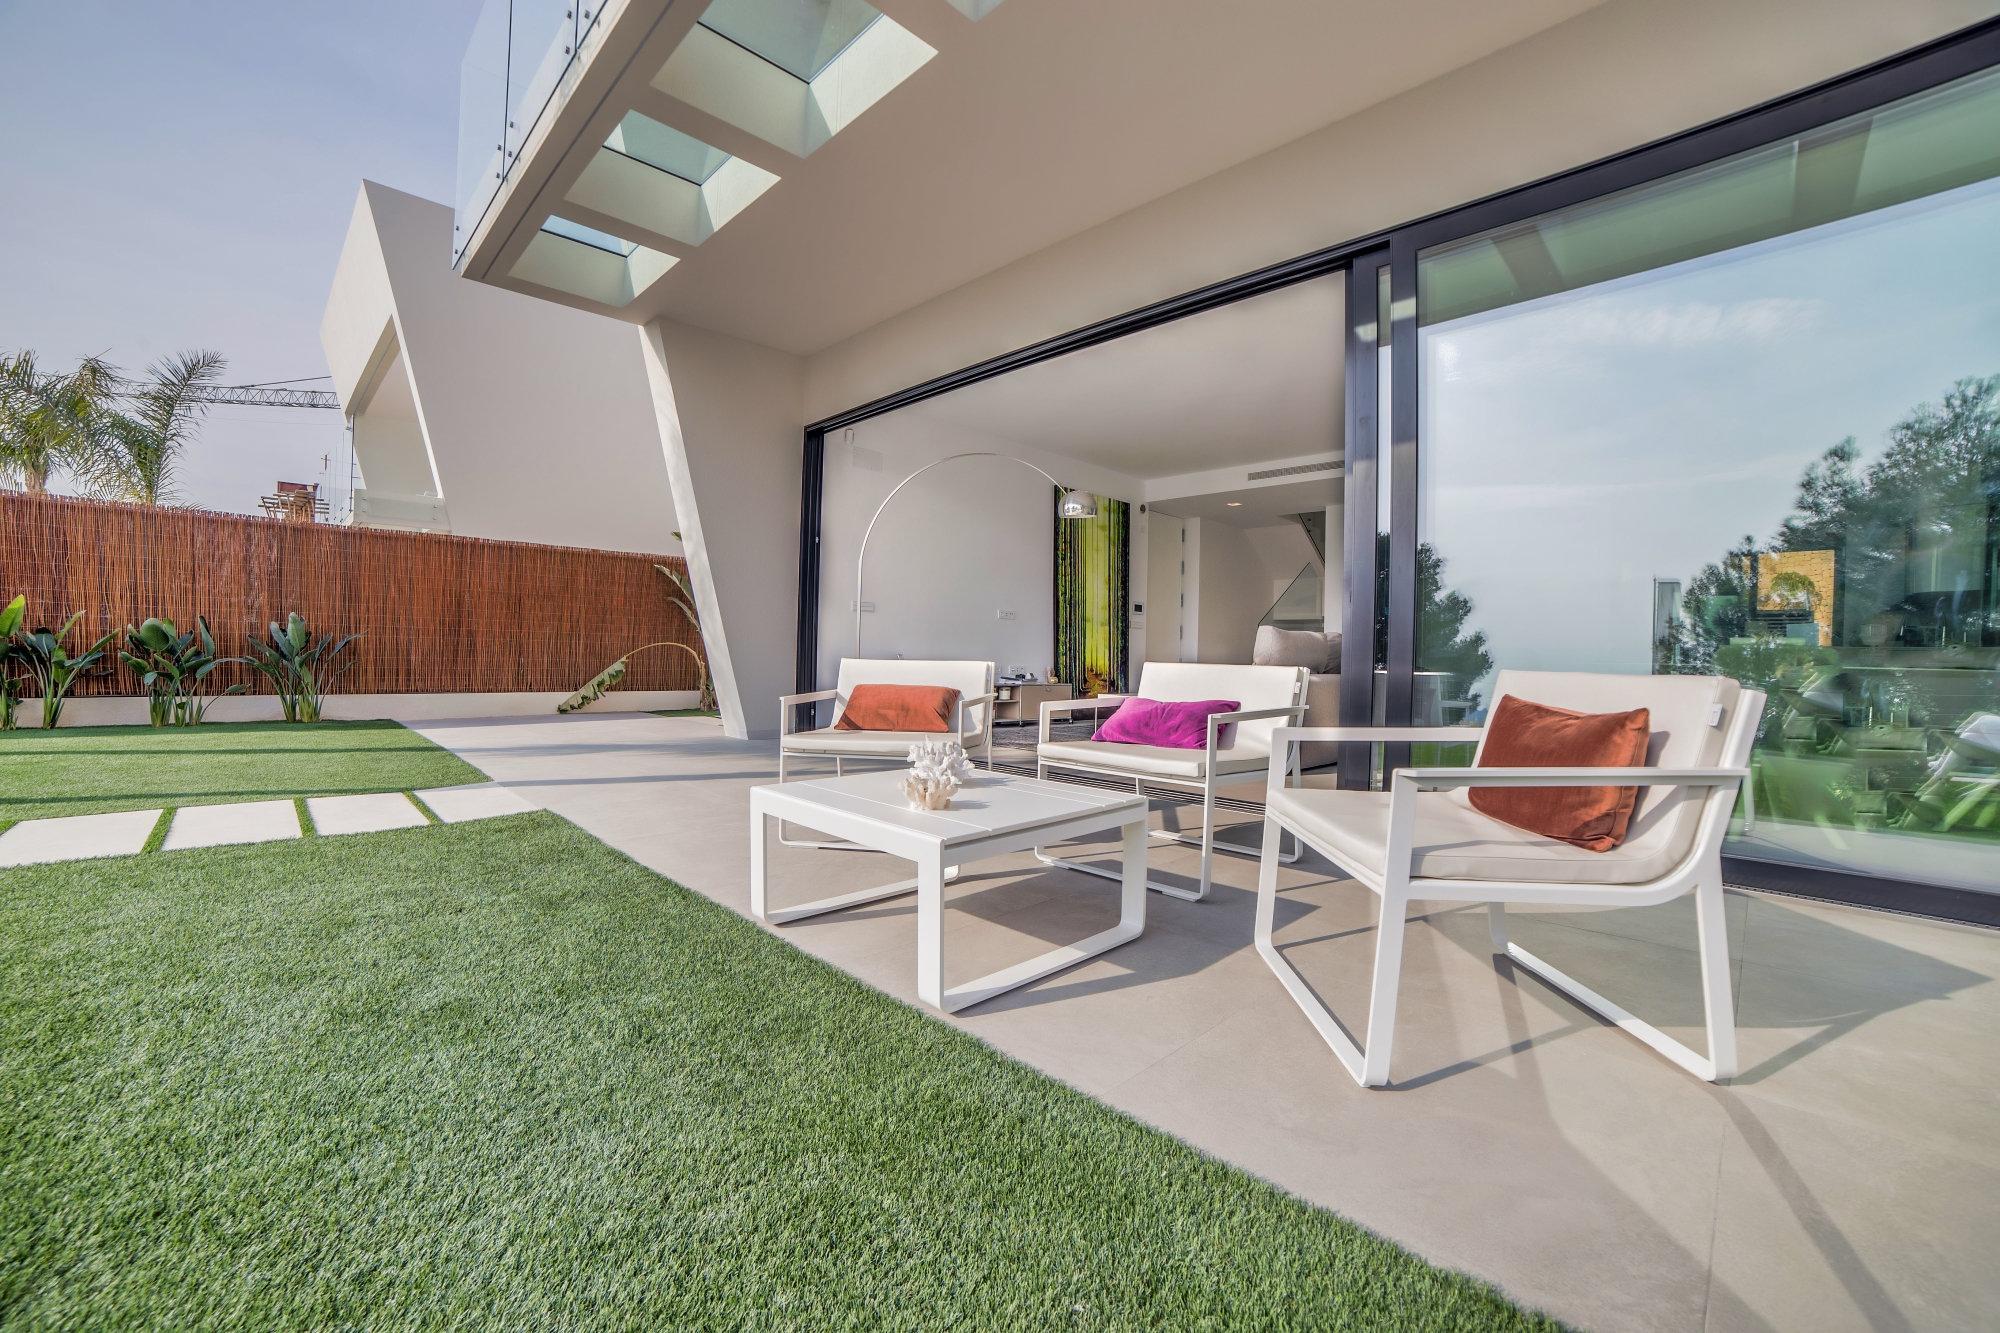 3-4 bedroom modern villas with sea views in Finestrat